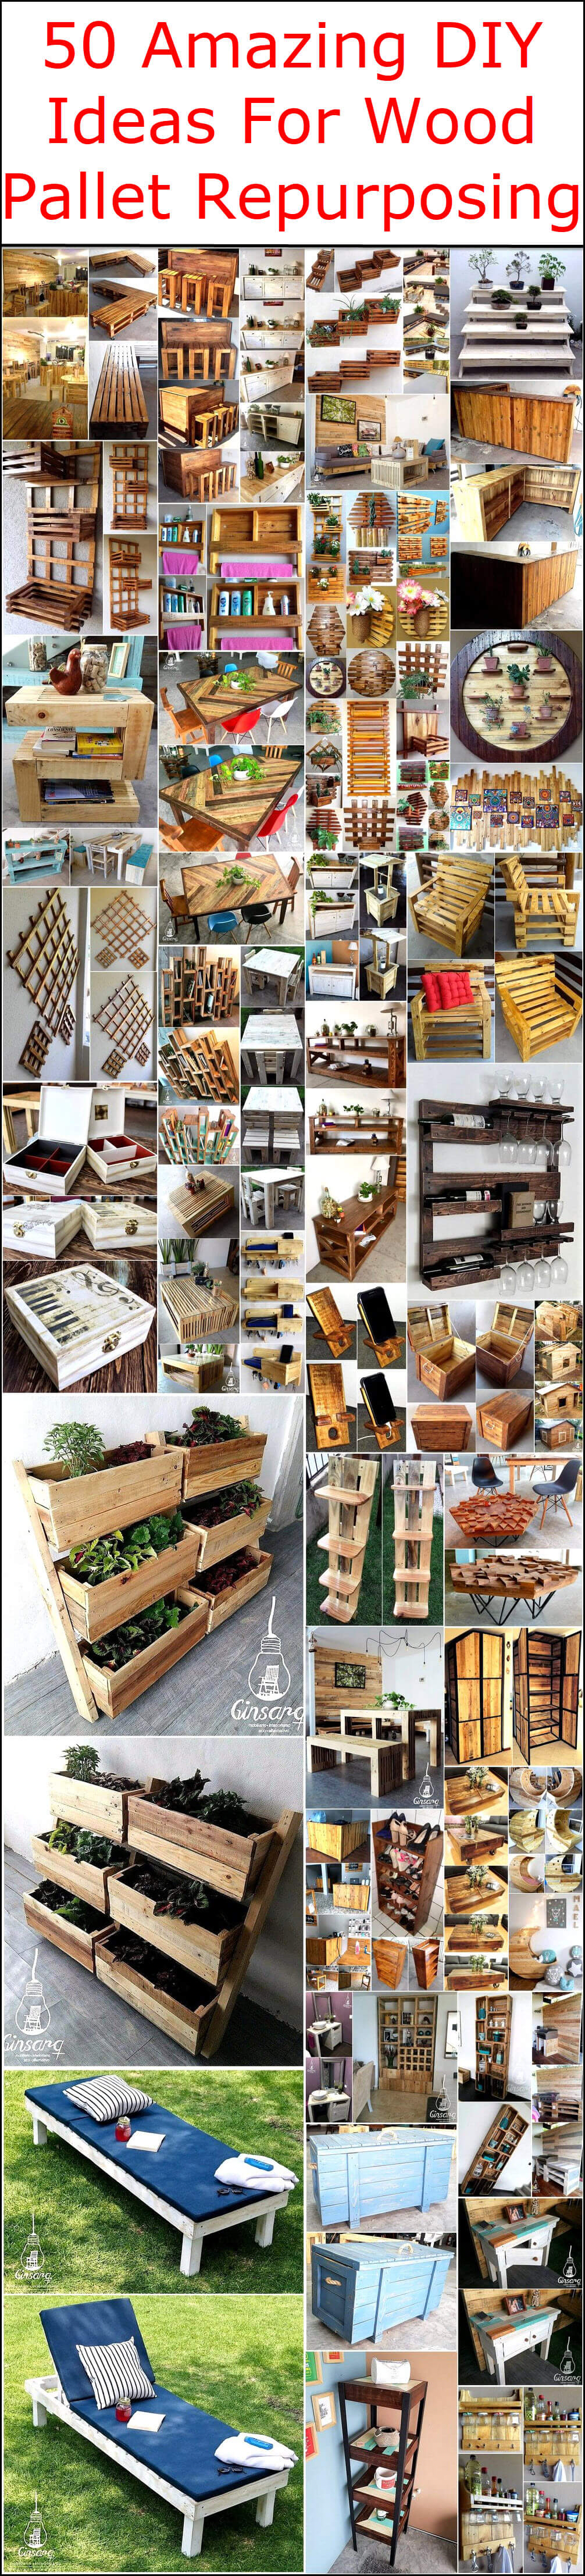 50 Amazing DIY Ideas For Wood Pallet Repurposing